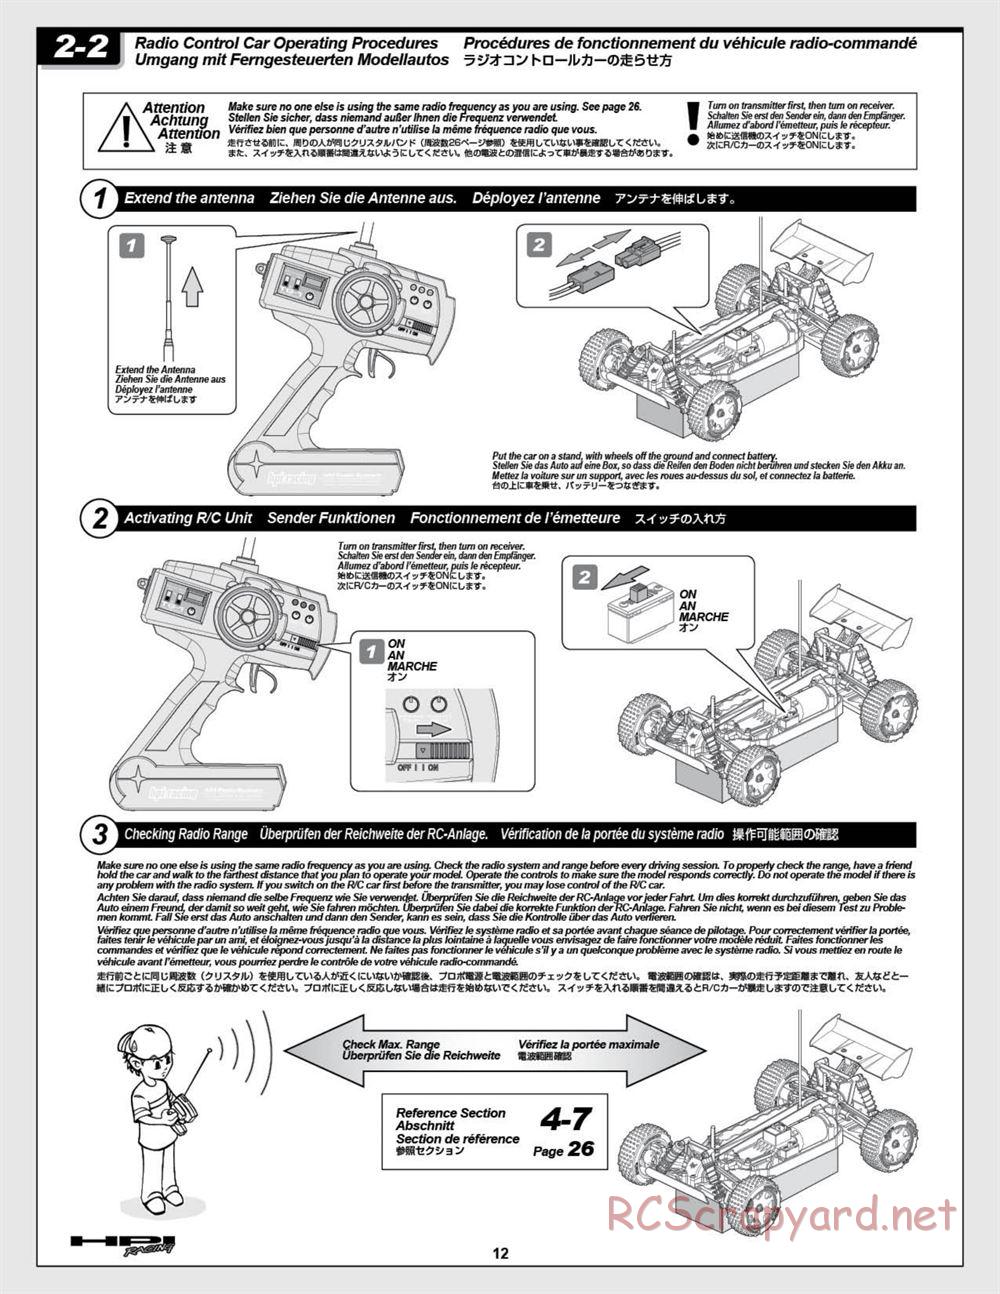 HPI - Brama 10B - Manual - Page 12